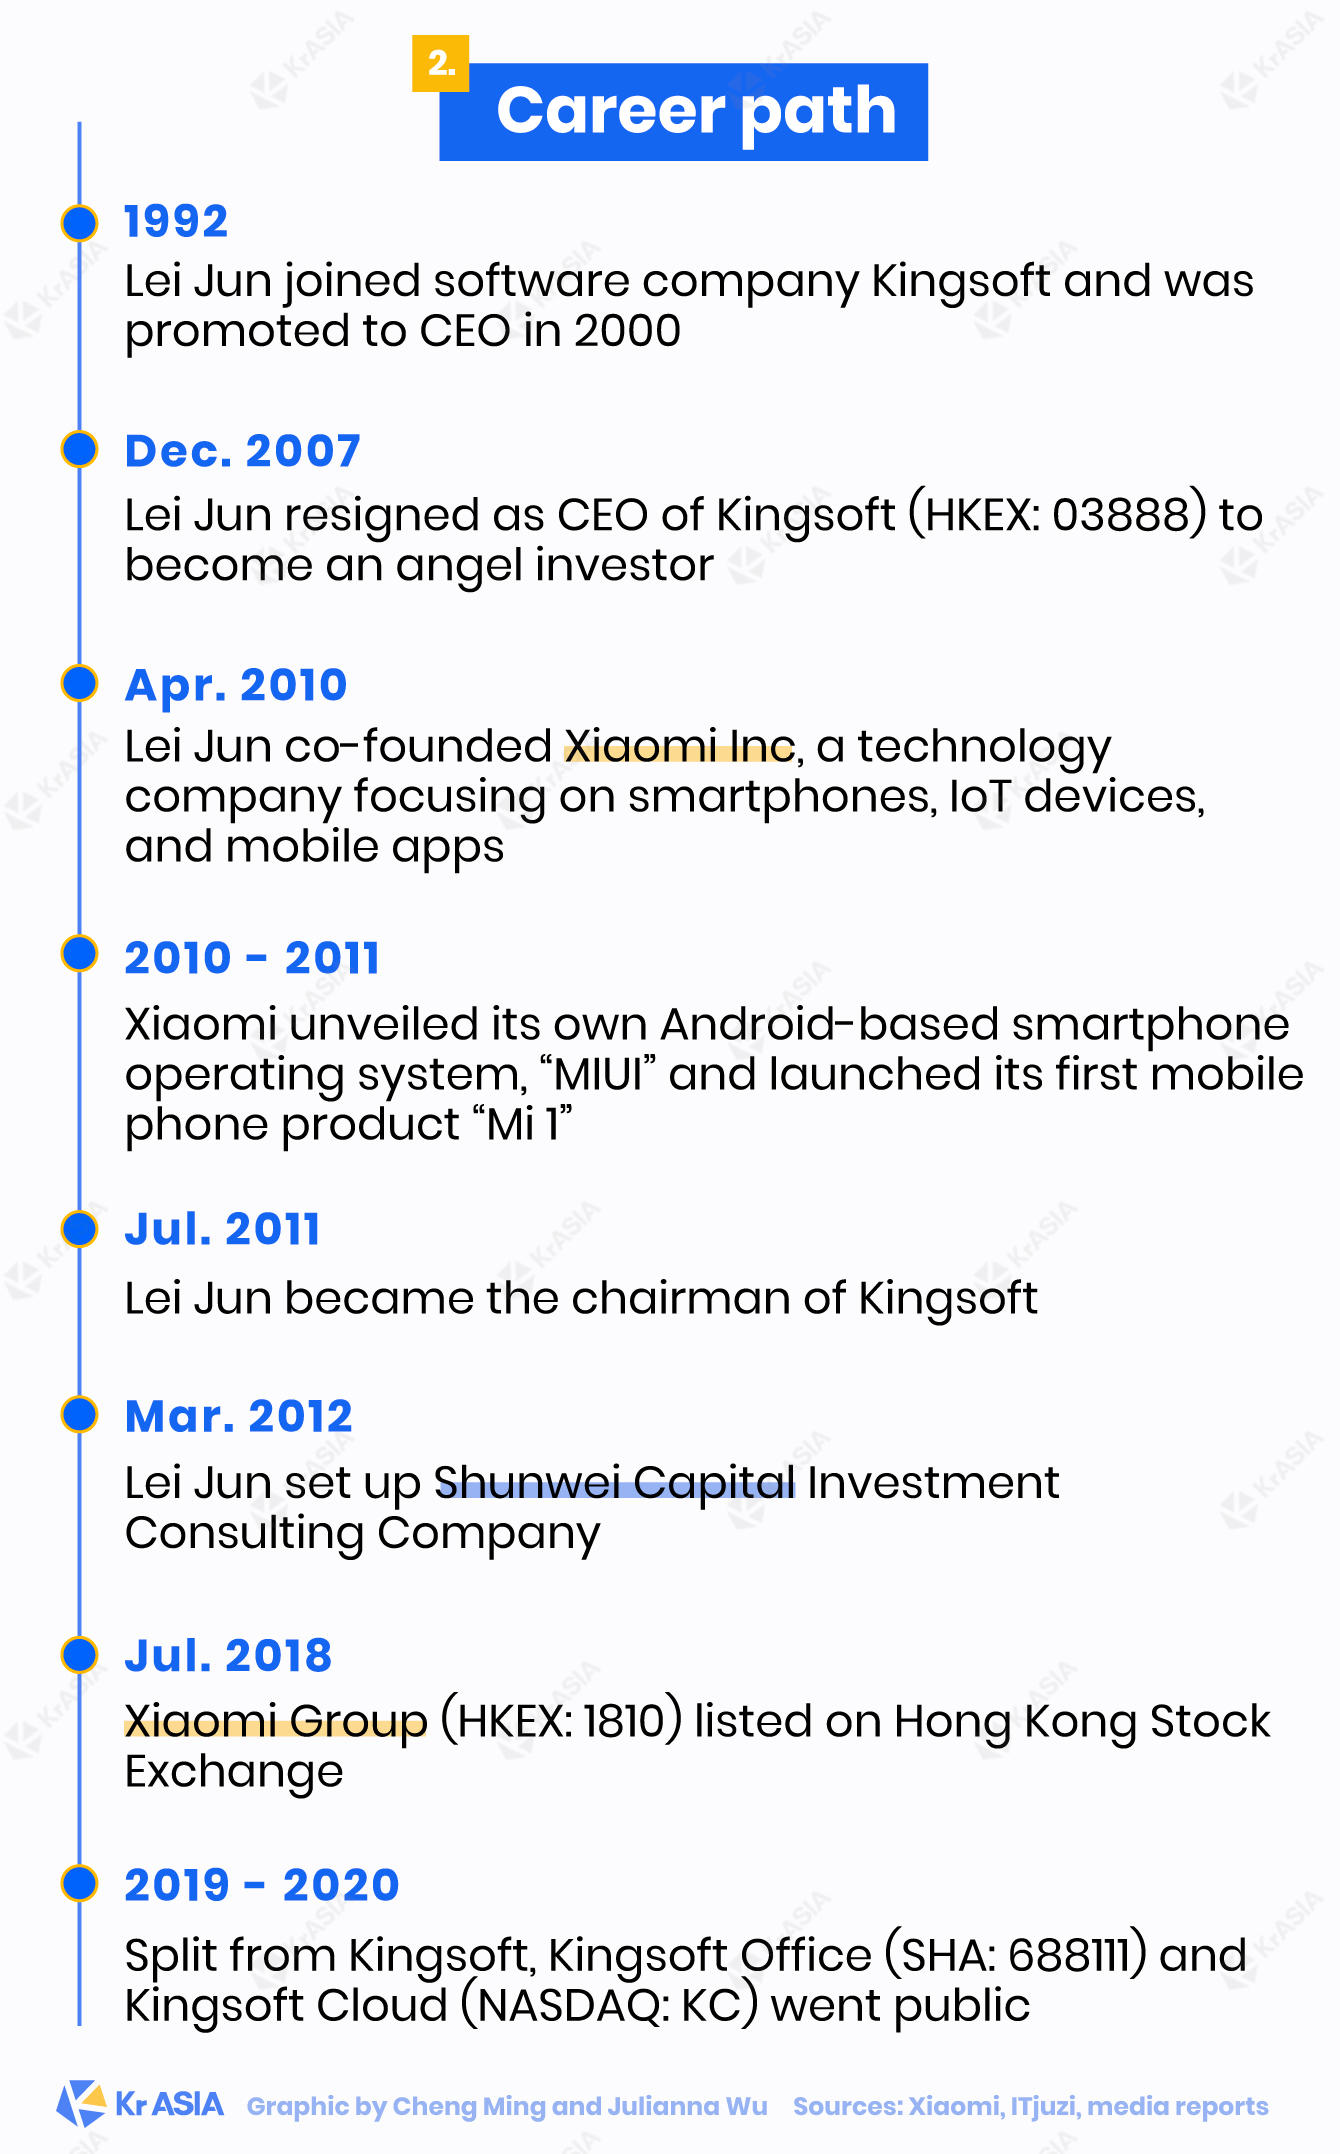 Xiaomi CEO Lei Jun's career path